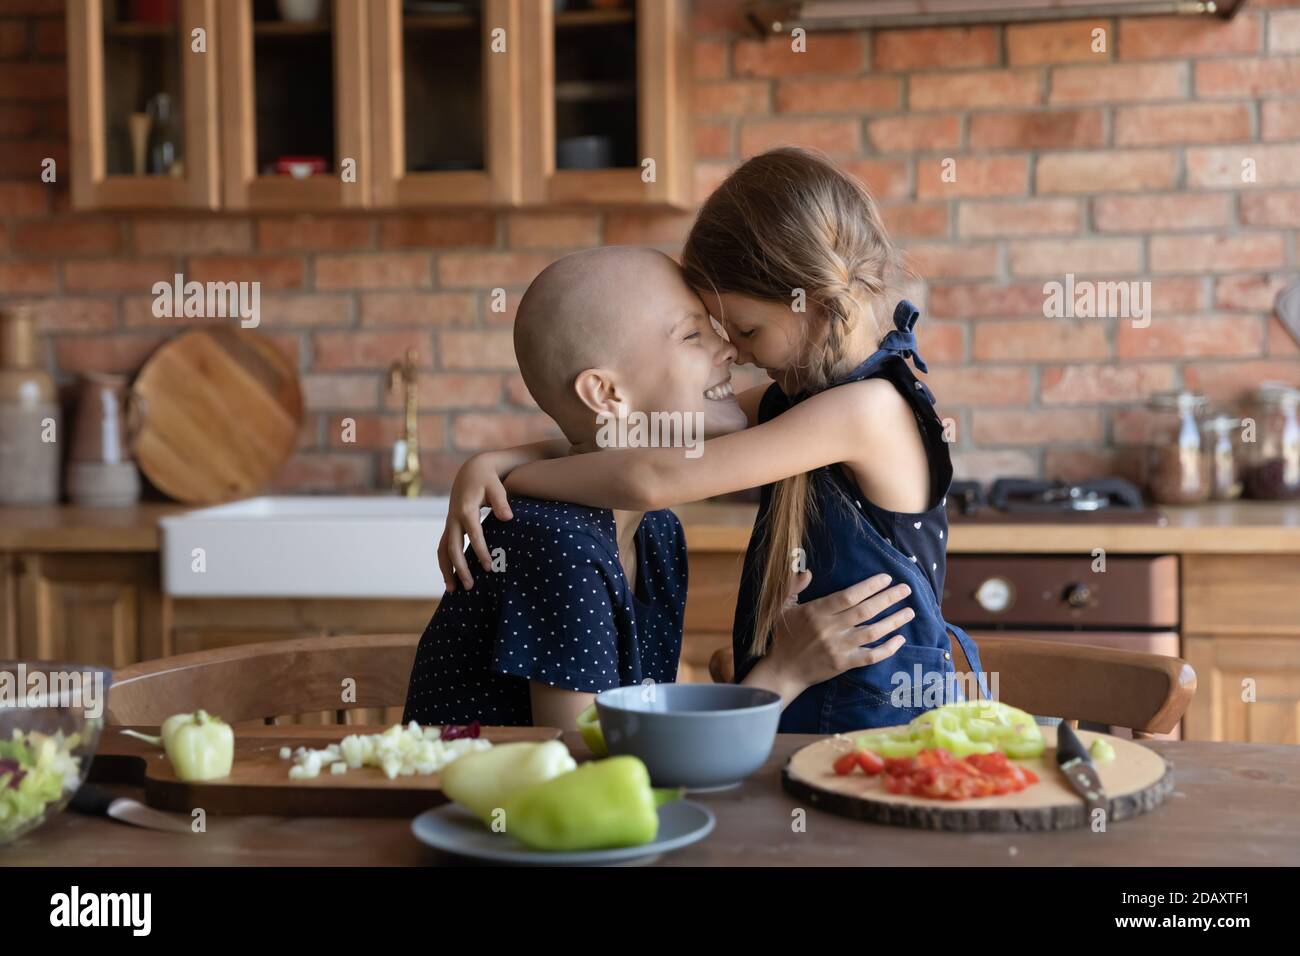 Affectionate mom struggling against cancer hugging daughter in kitchen apron Stock Photo